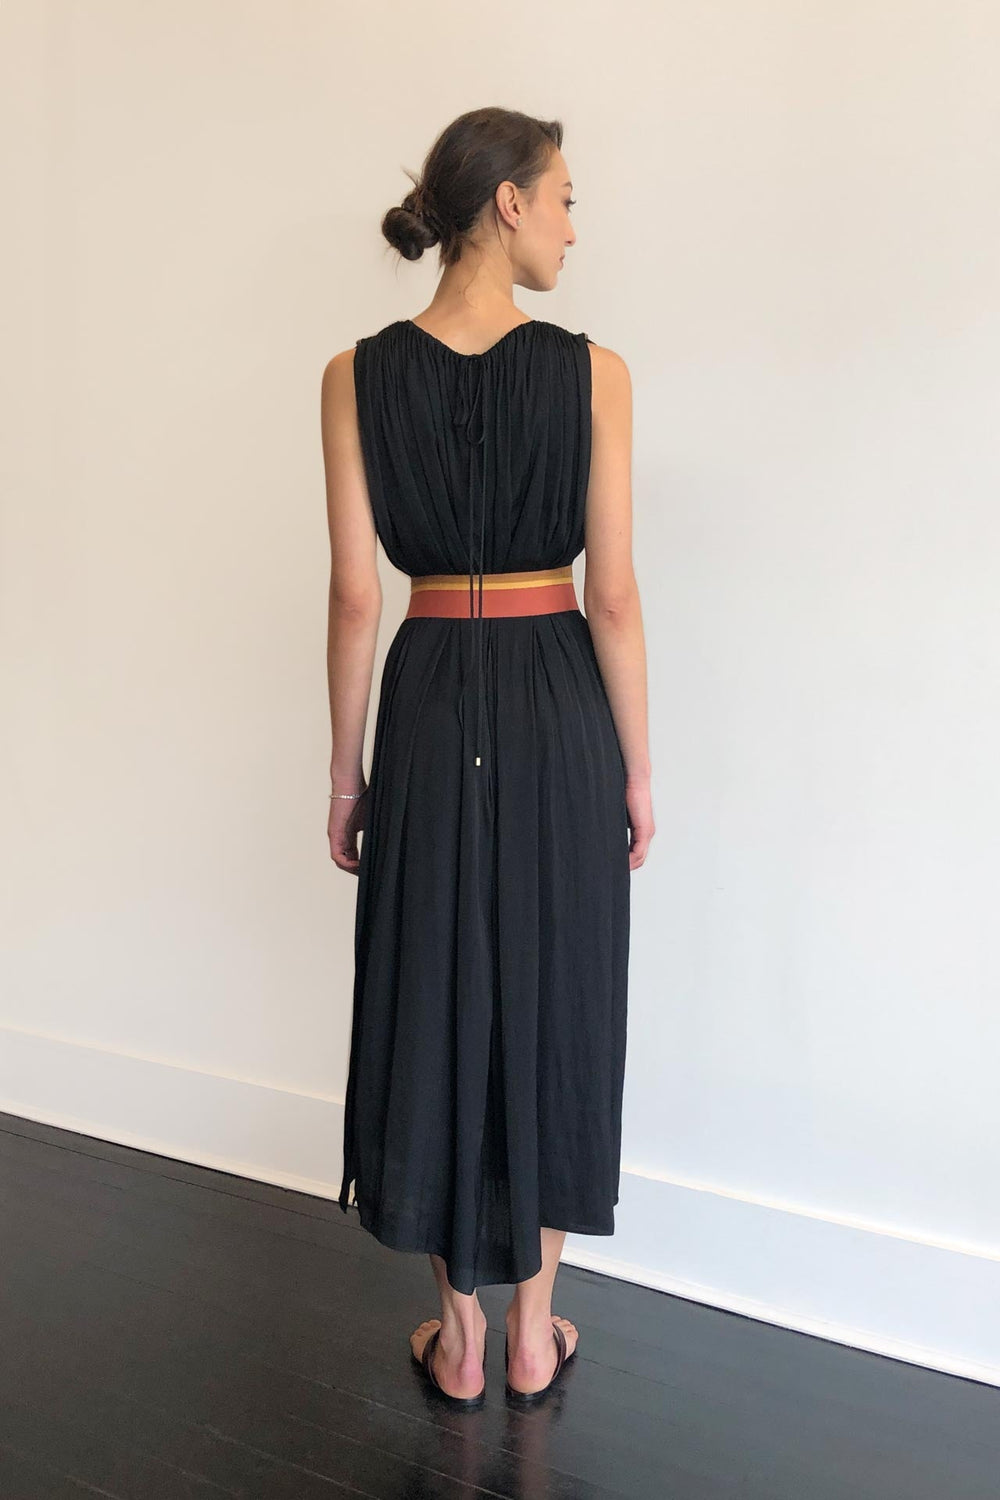 Fashion Designer CARL KAPP collection | Granite Onesize Fits All Black dress | Sydney Australia